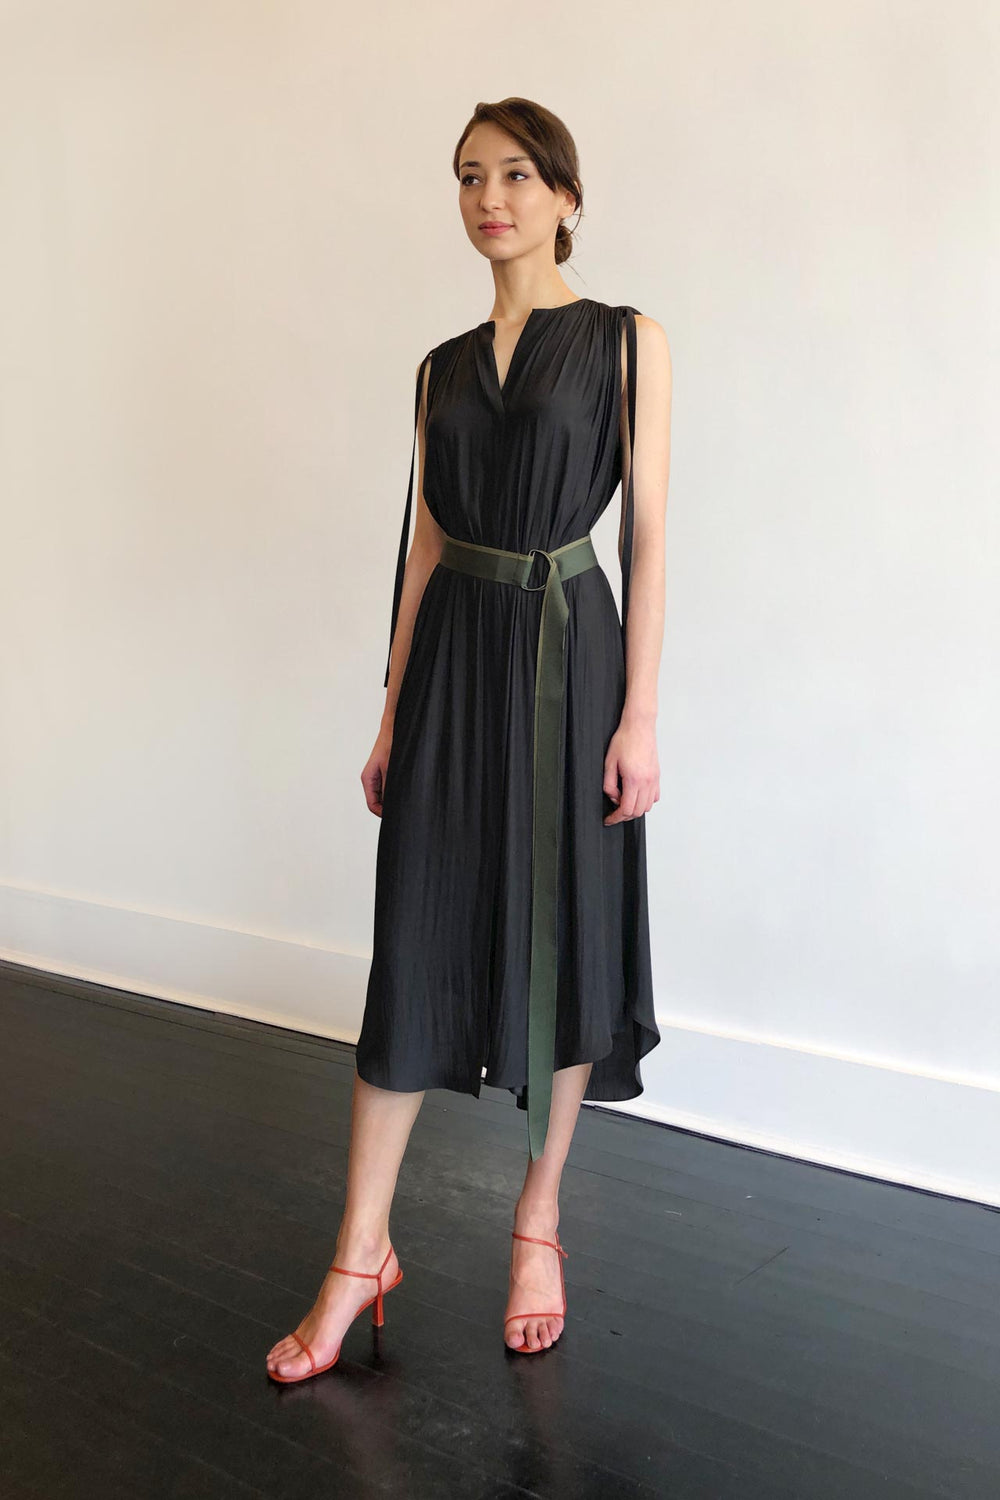 Fashion Designer CARL KAPP collection | Patatran Onesize Fits All cocktail dress Dark Grey | Sydney Australia